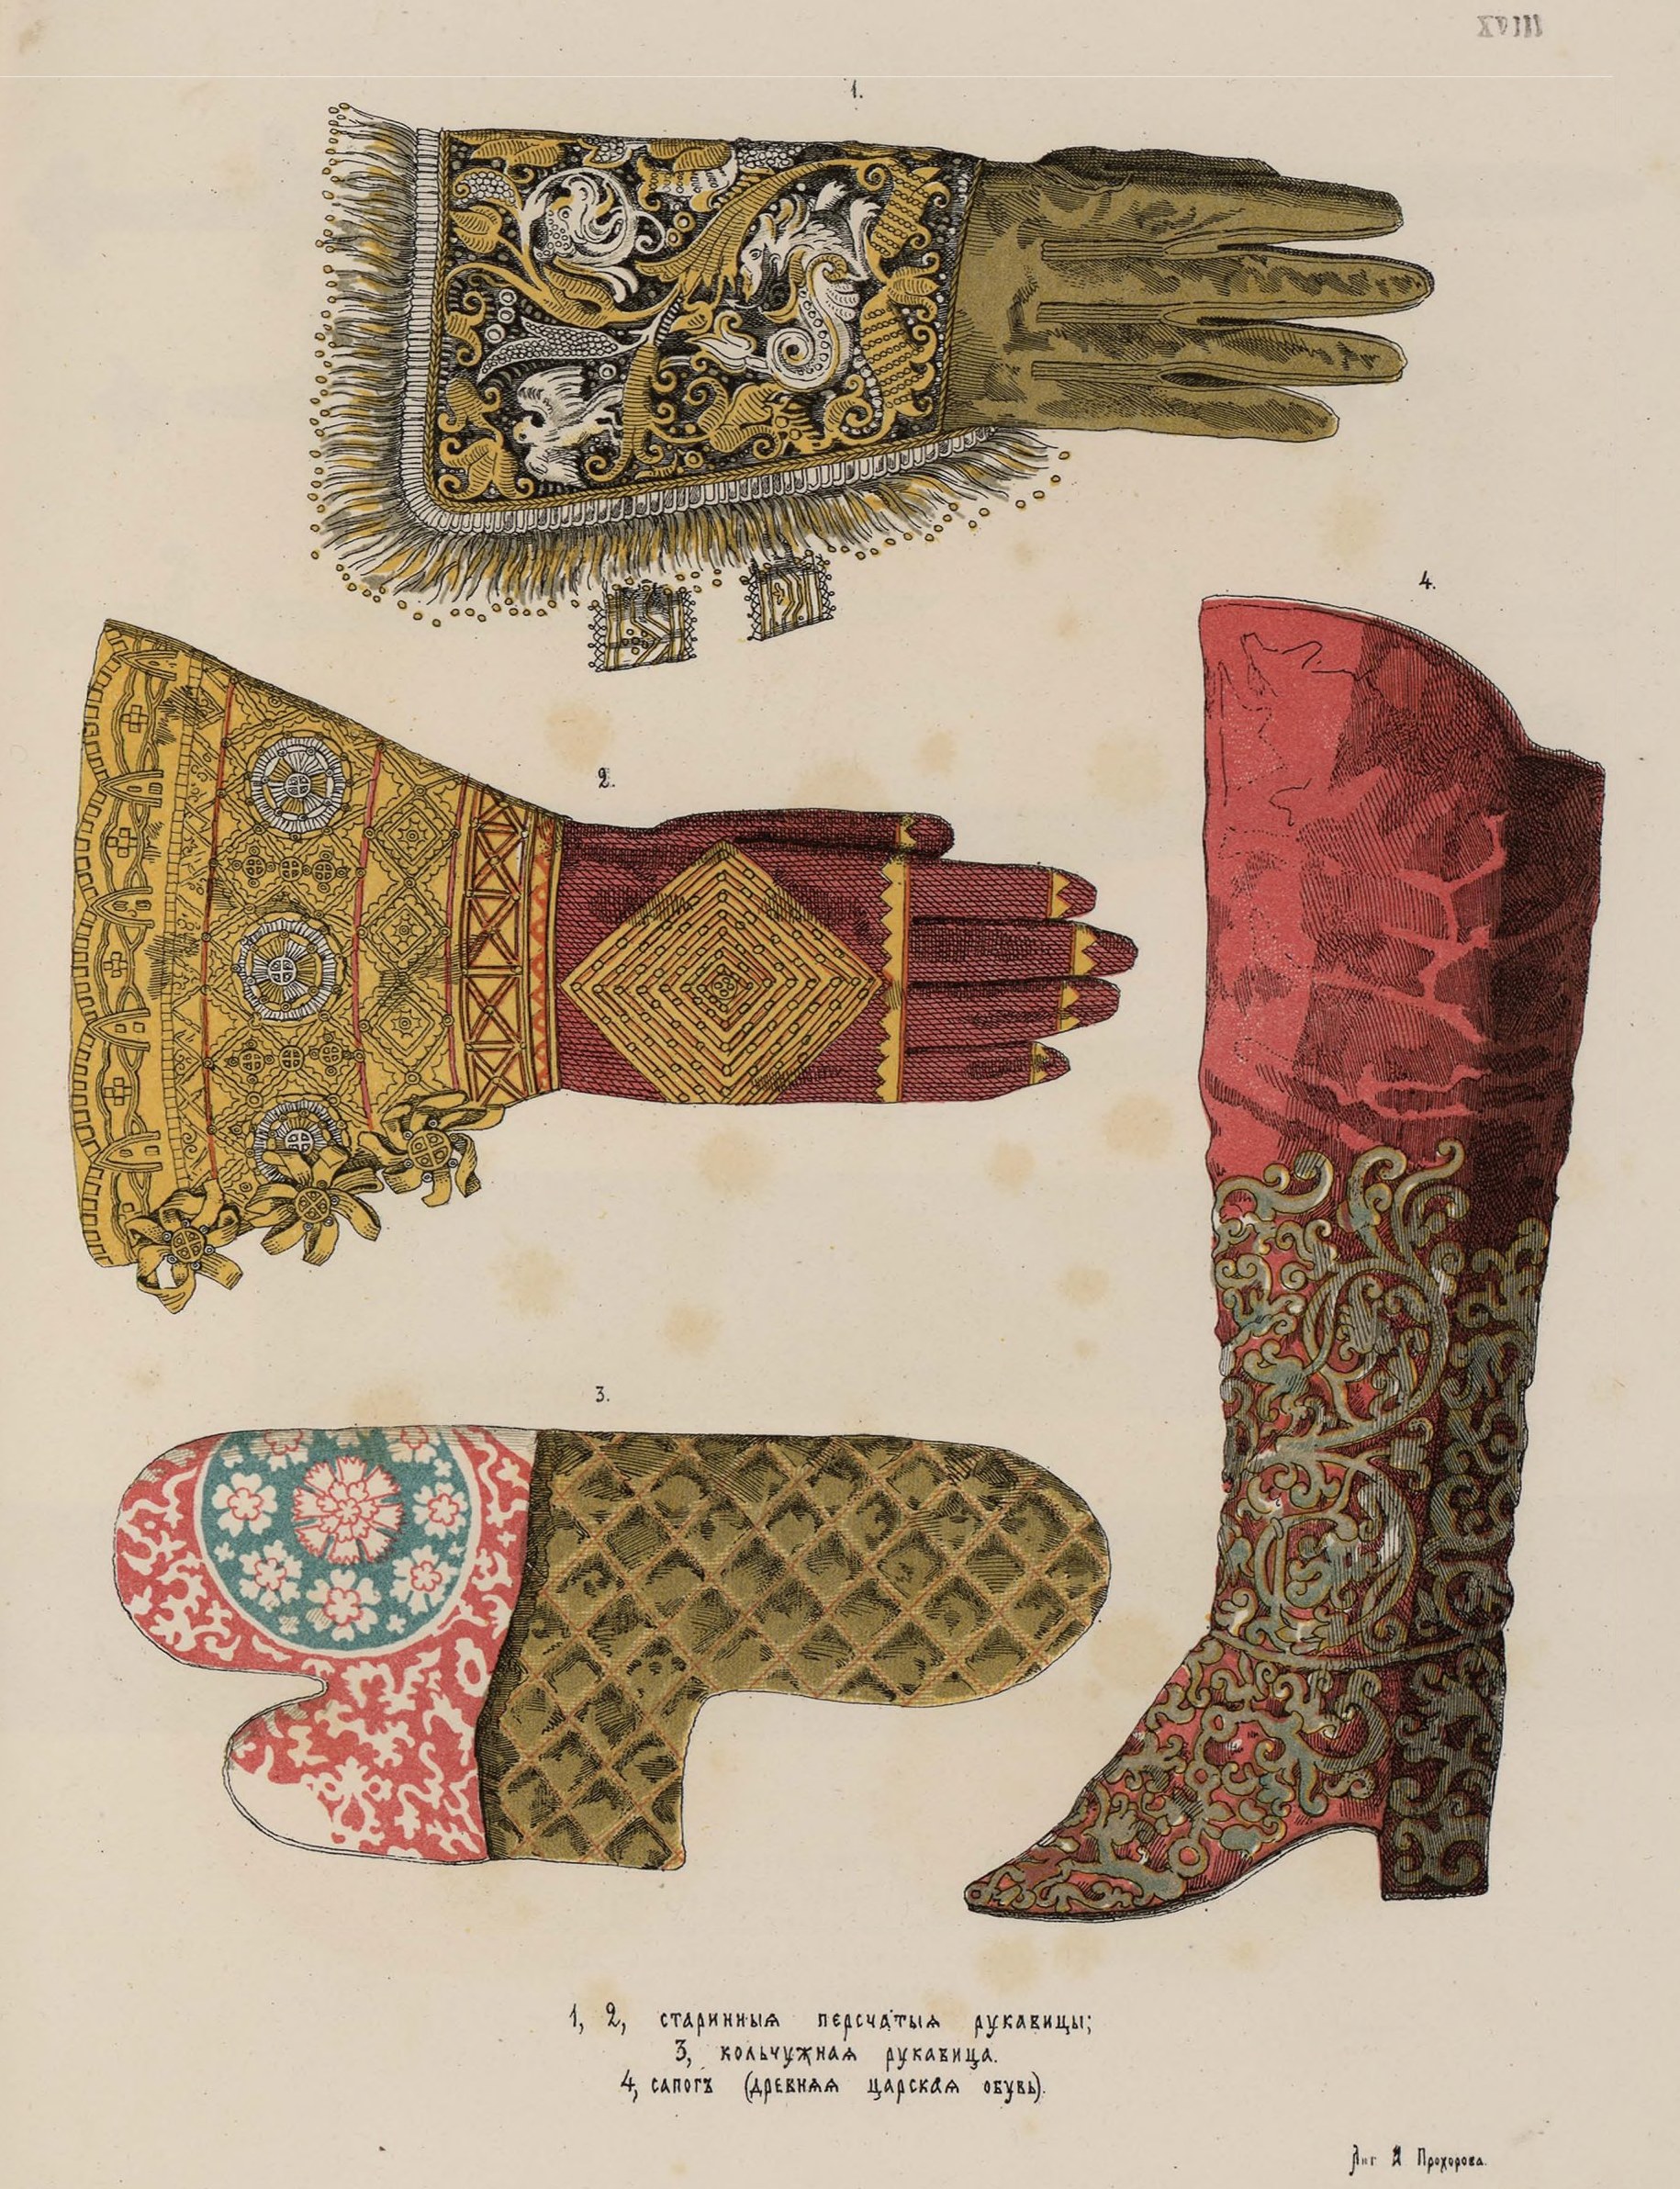 1 и 2. Старинные персчатые рукавицы. 3. Кольчужная рукавица. 4. Сапог (древняя царская обувь).